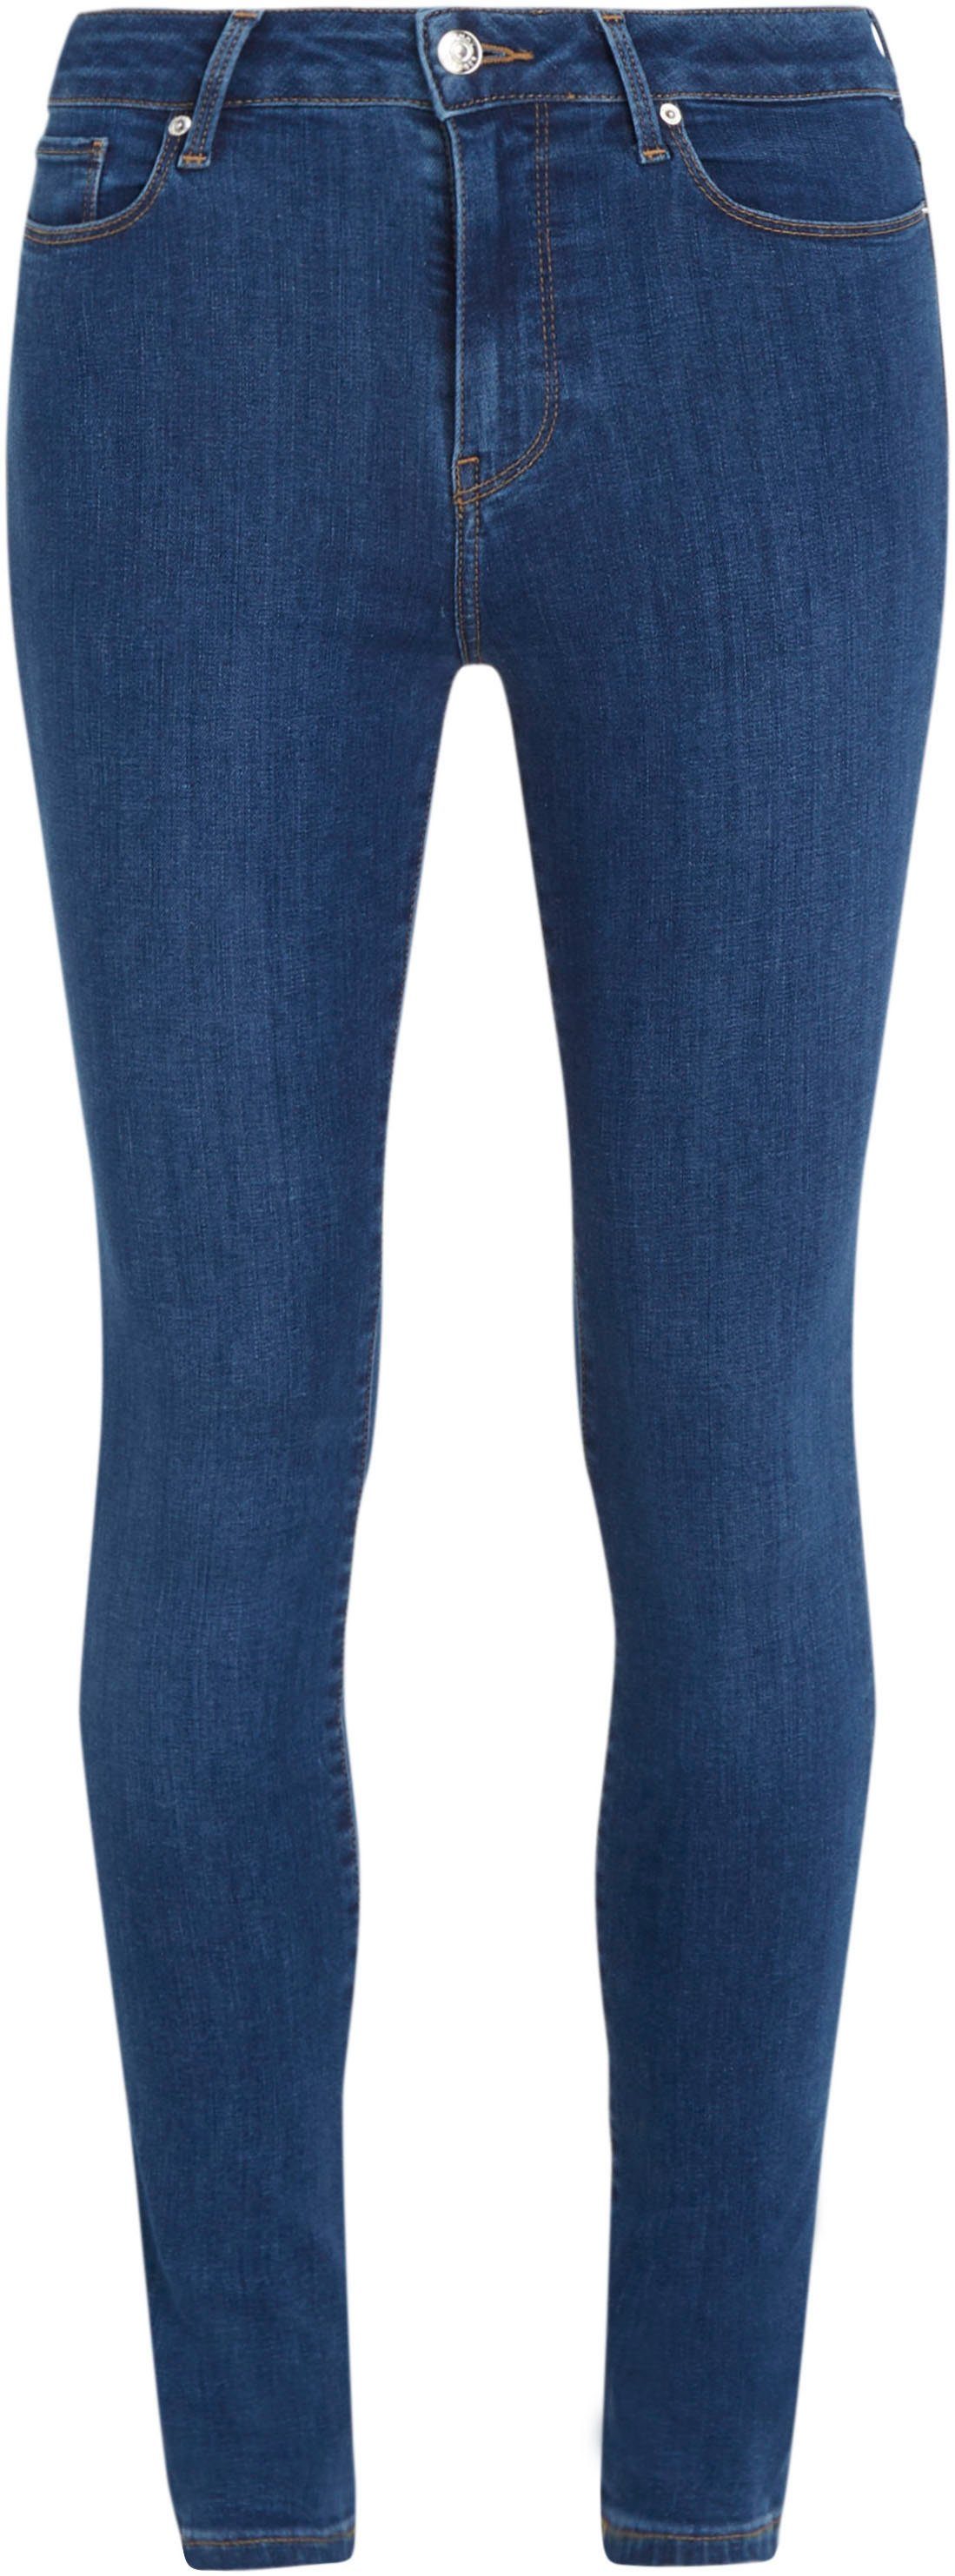 TH mid Hilfiger blauer blue Tommy HW SKINNY in U Waschung KAI FLEX HARLEM Skinny-fit-Jeans